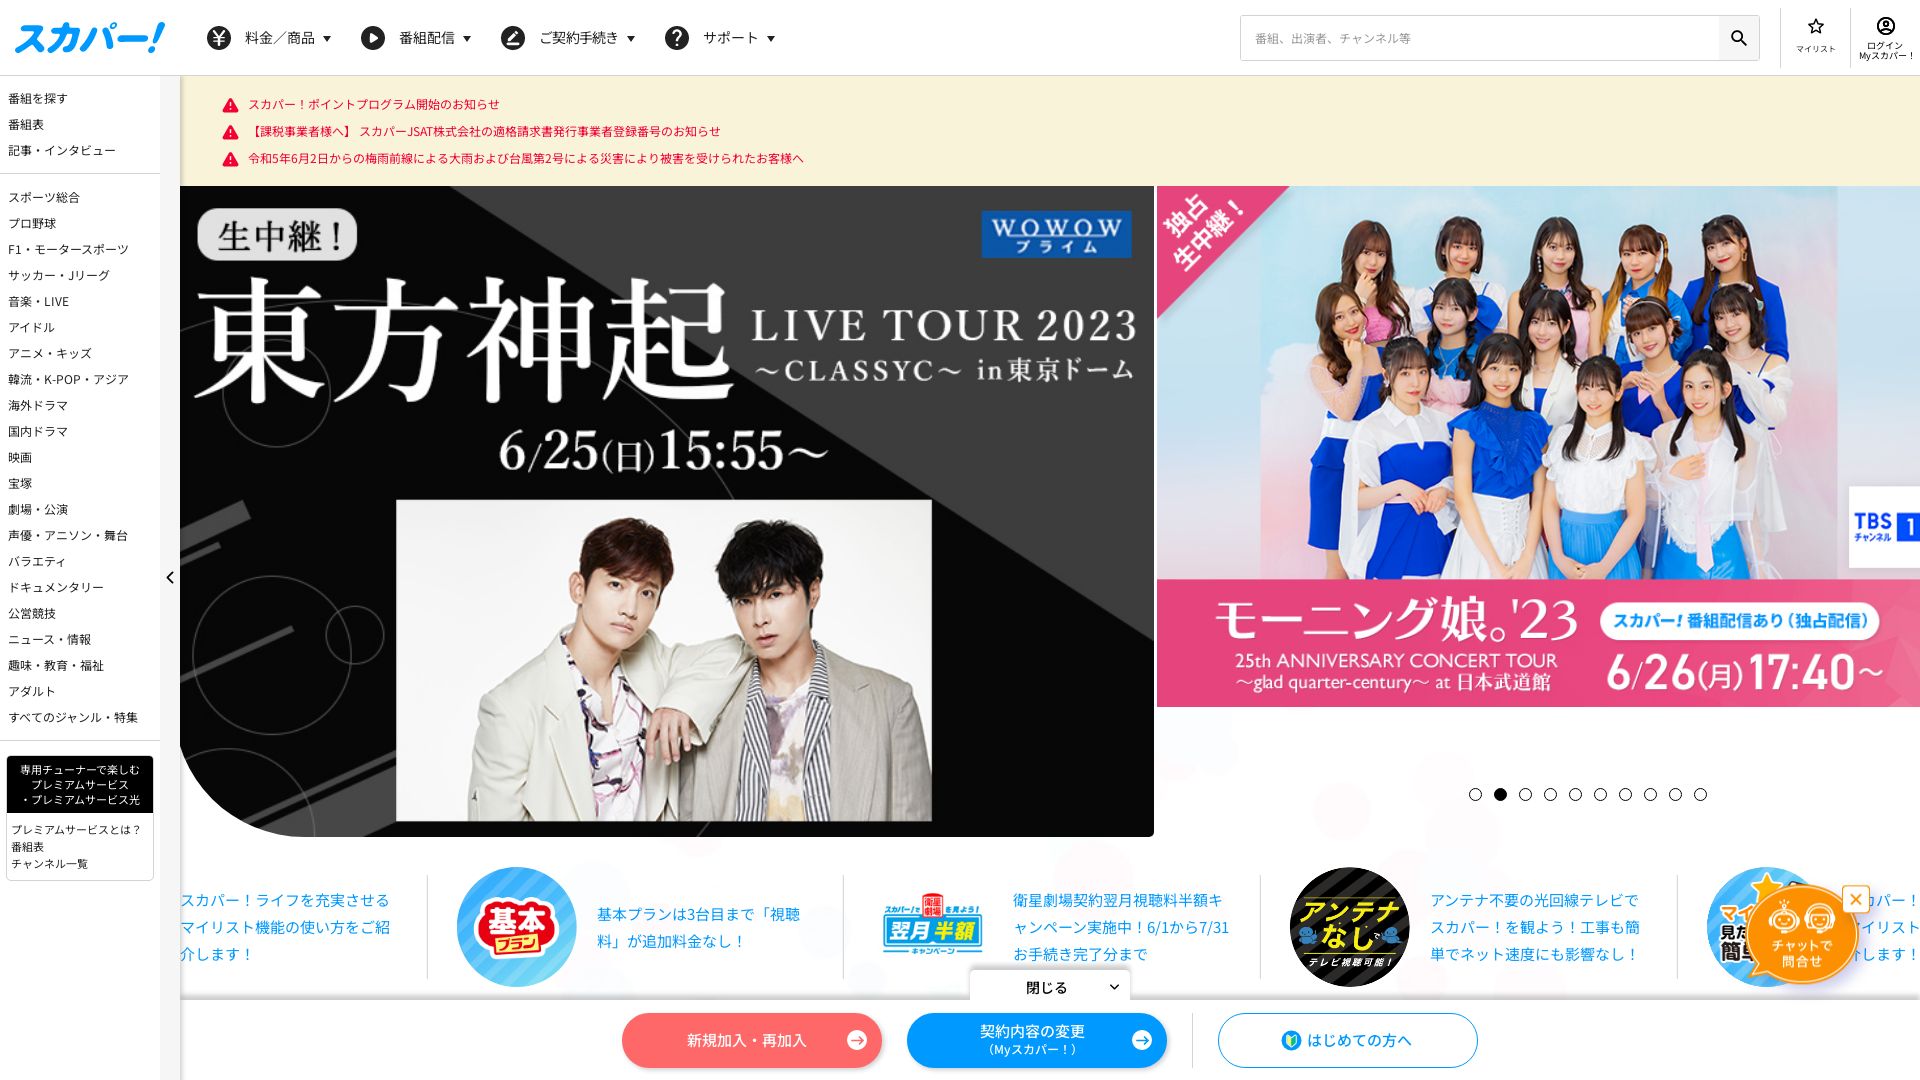 Website status skyperfectv.co.jp is   ONLINE